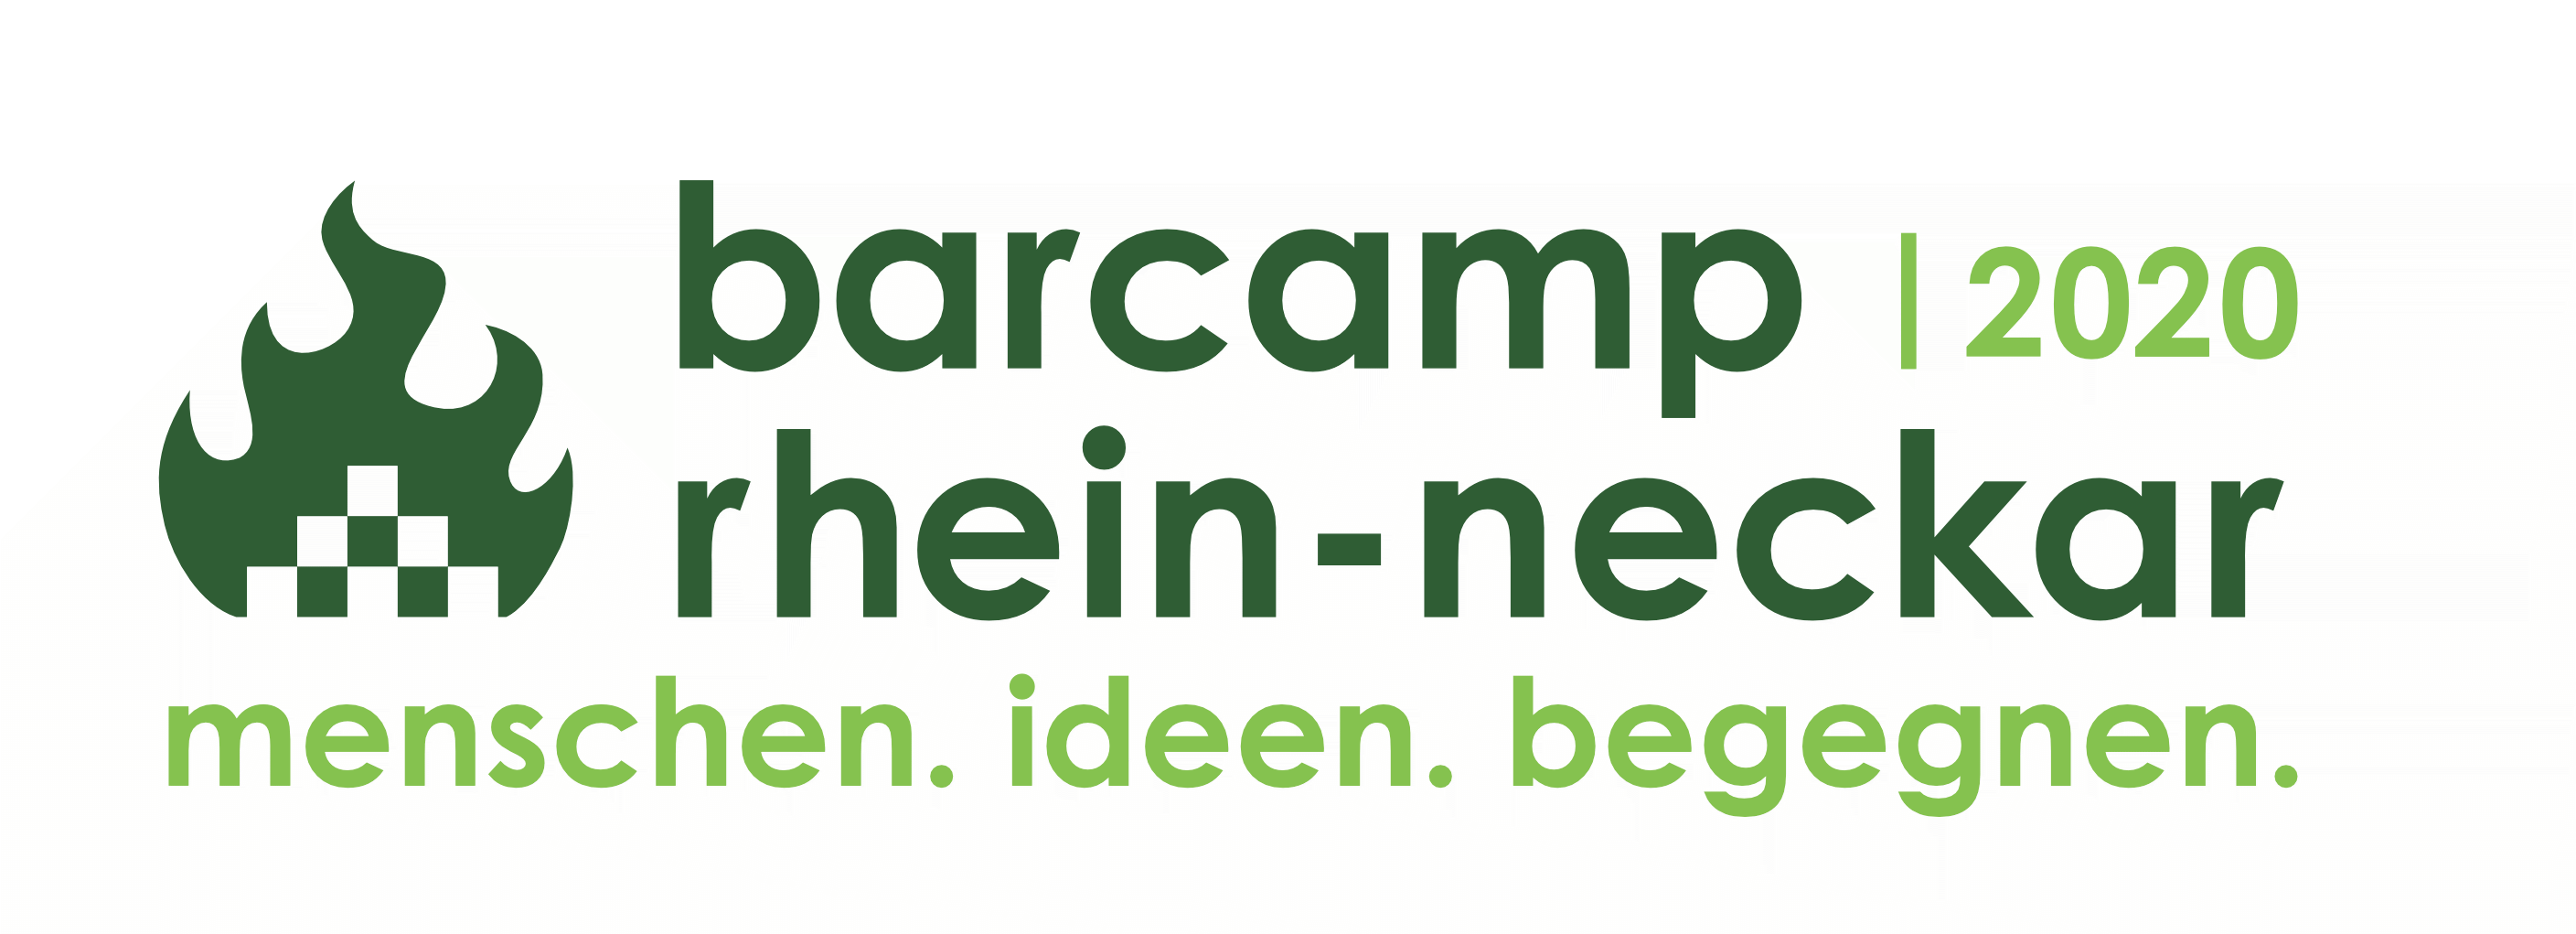 Barcamp Rhein-Neckar 2020 - menschen. ideen. begegnen.